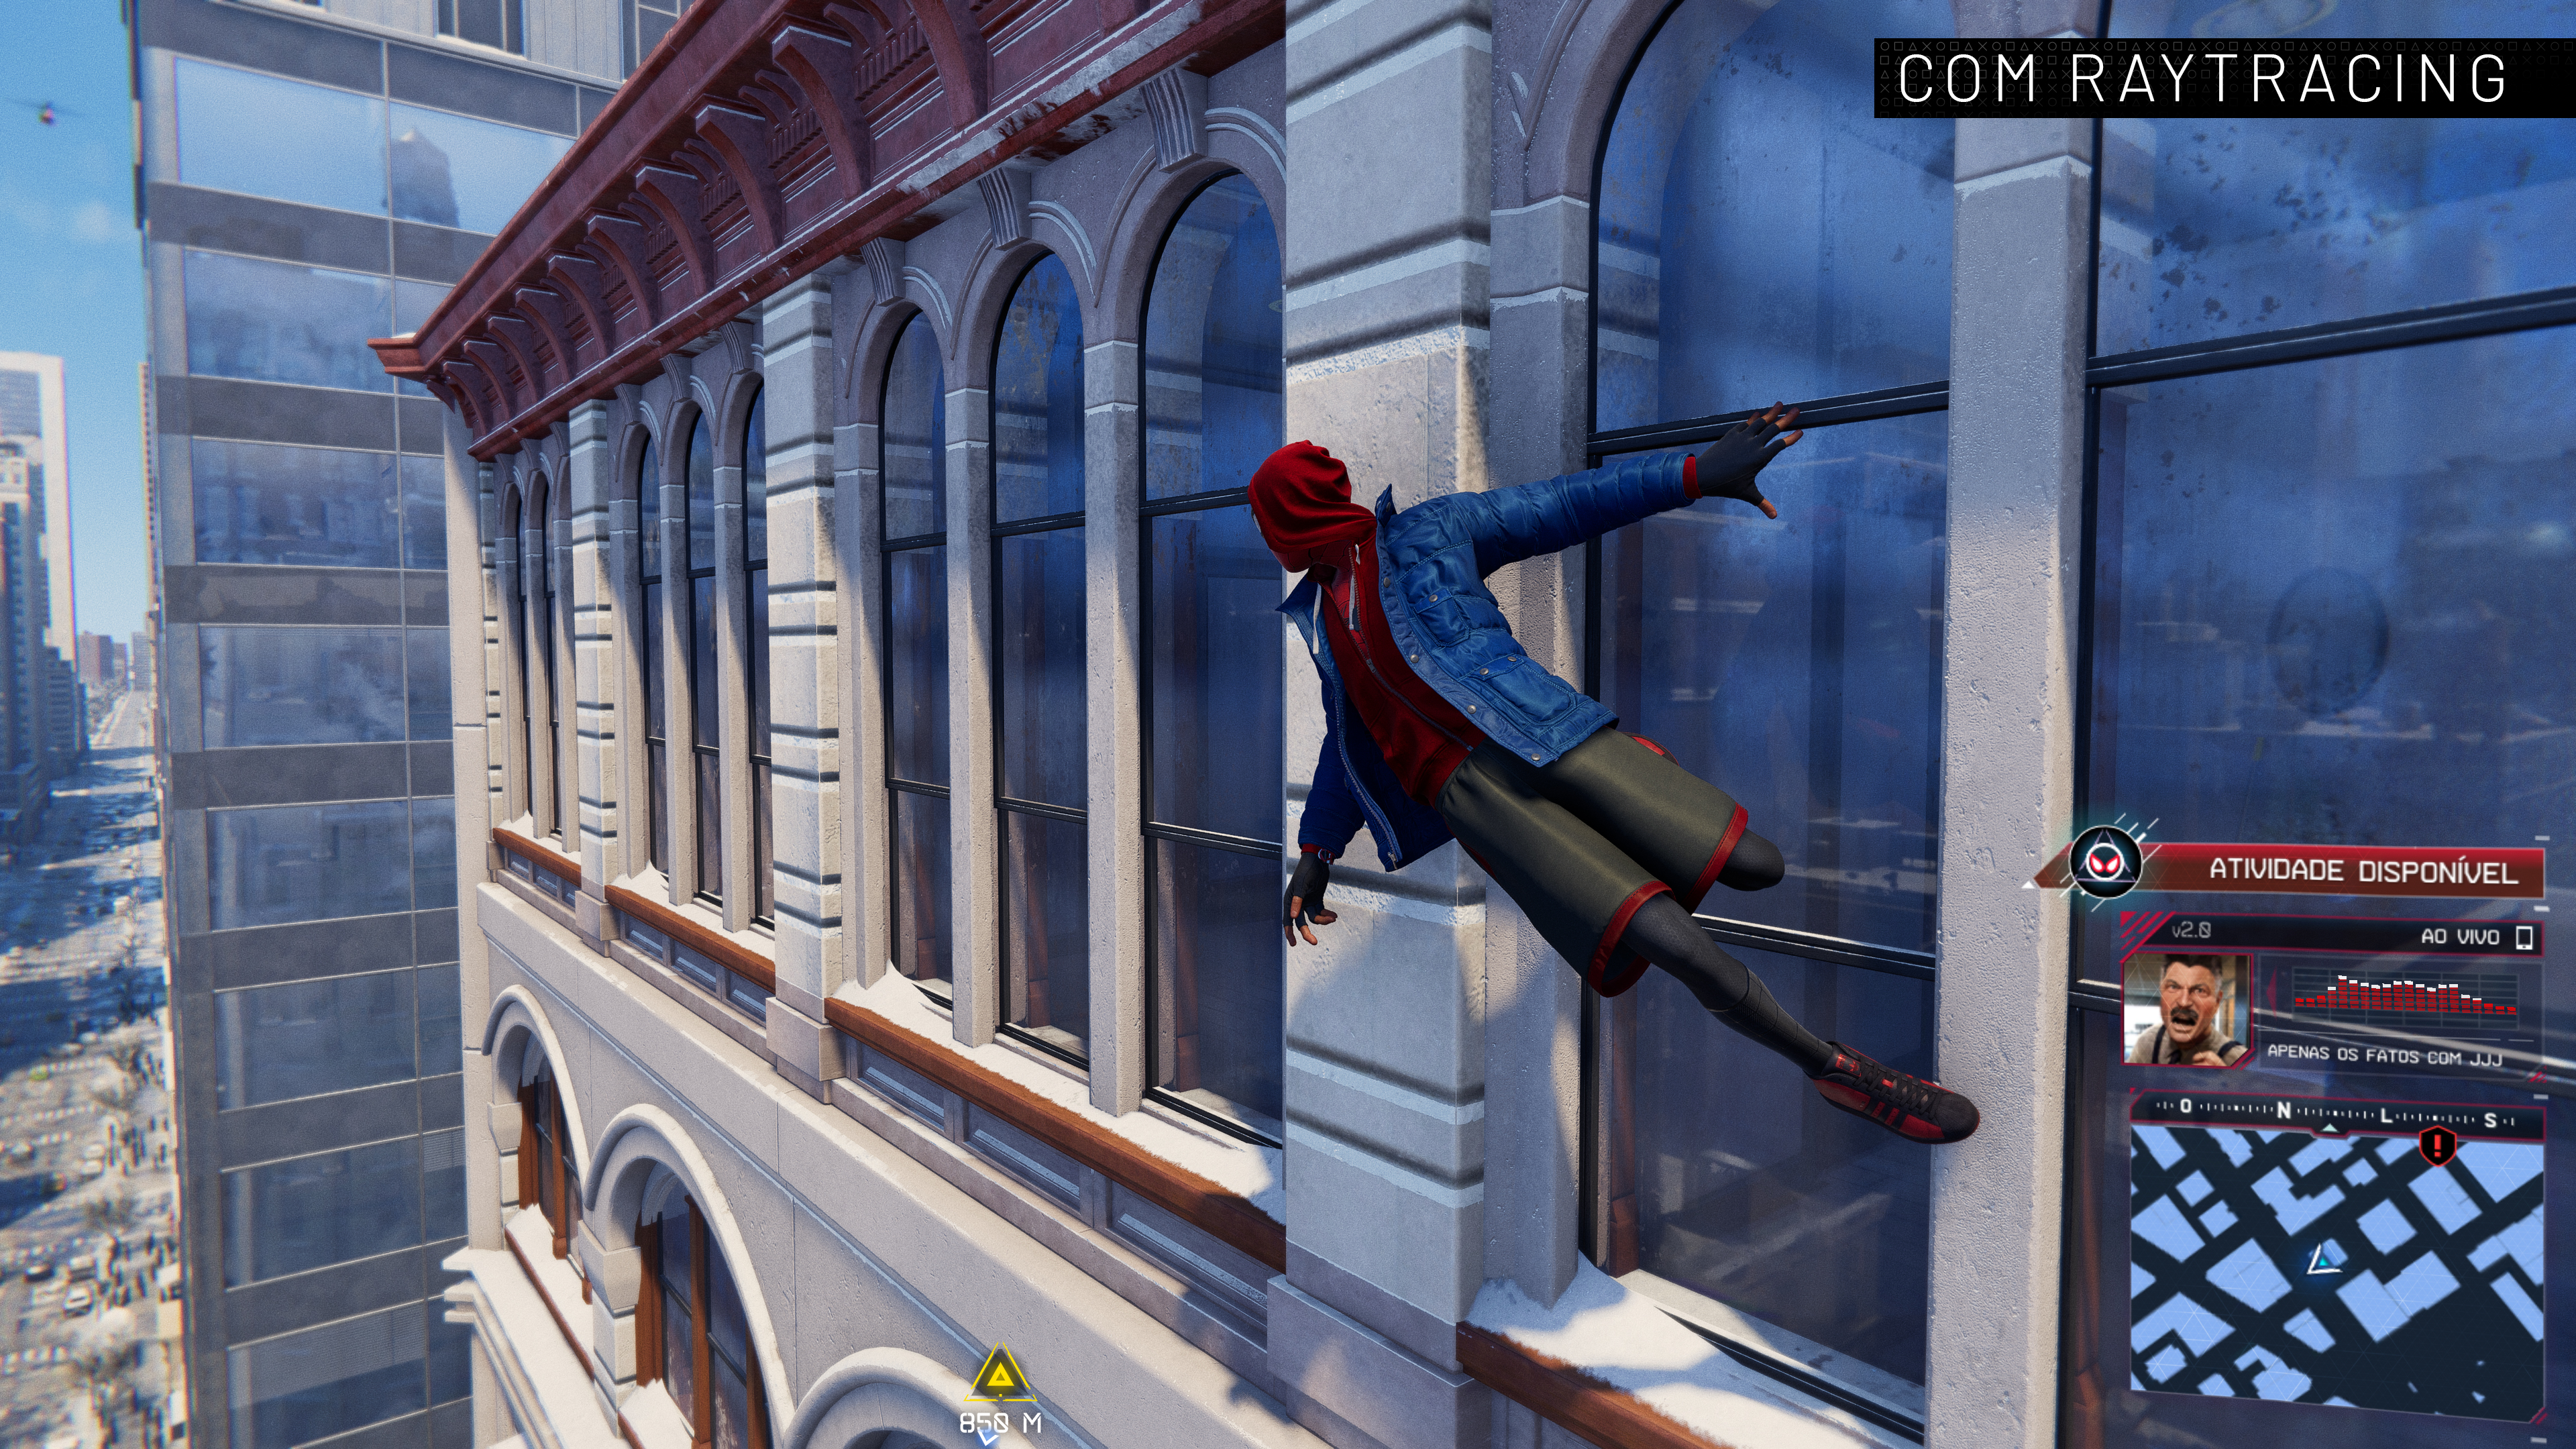 Spider Man: Miles Morales - Ps5 Mídia Física - Mundo Joy Games